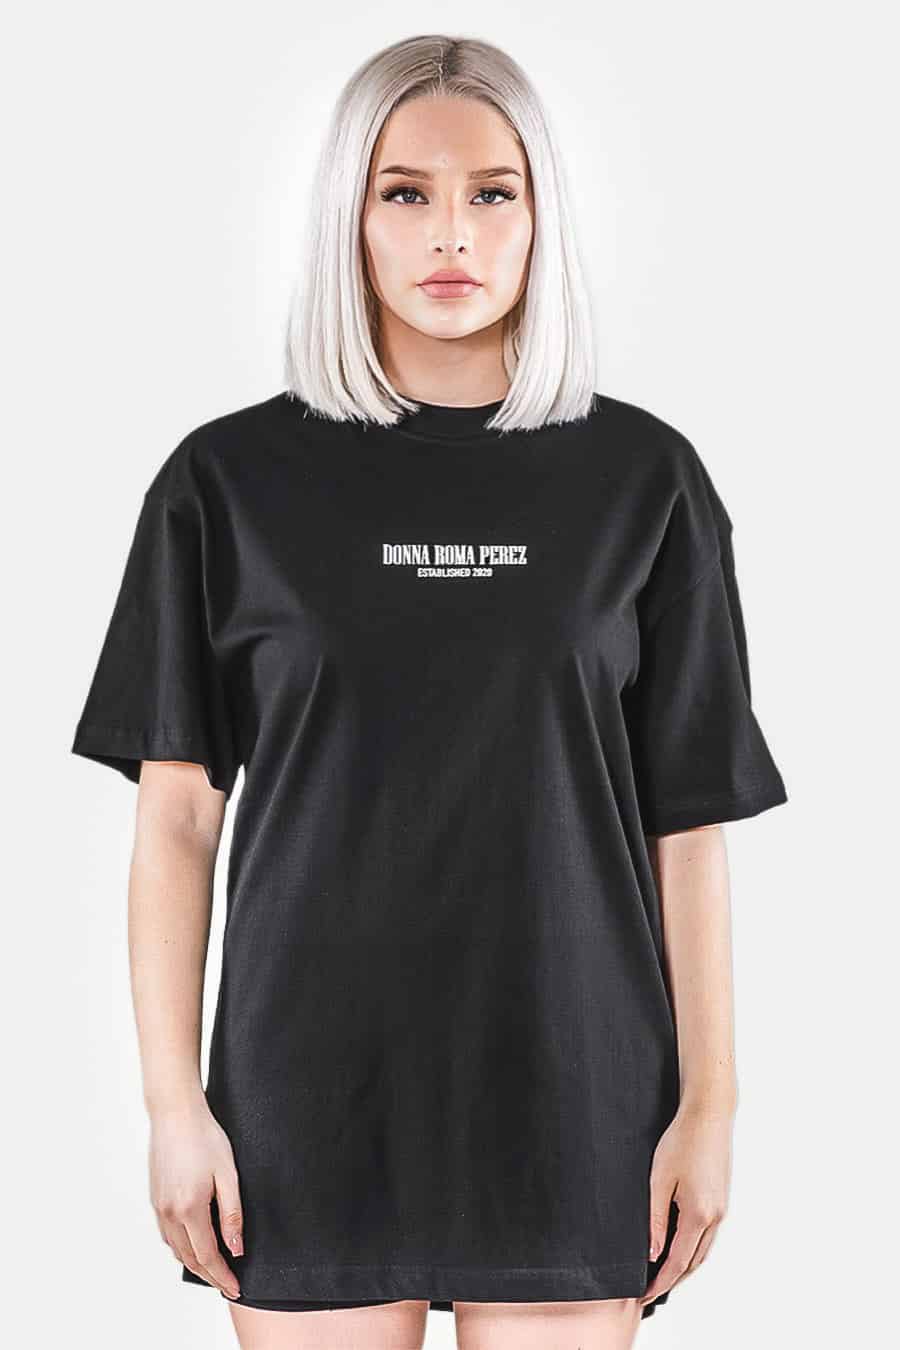 EST. Shirt [Black] - WOMEN